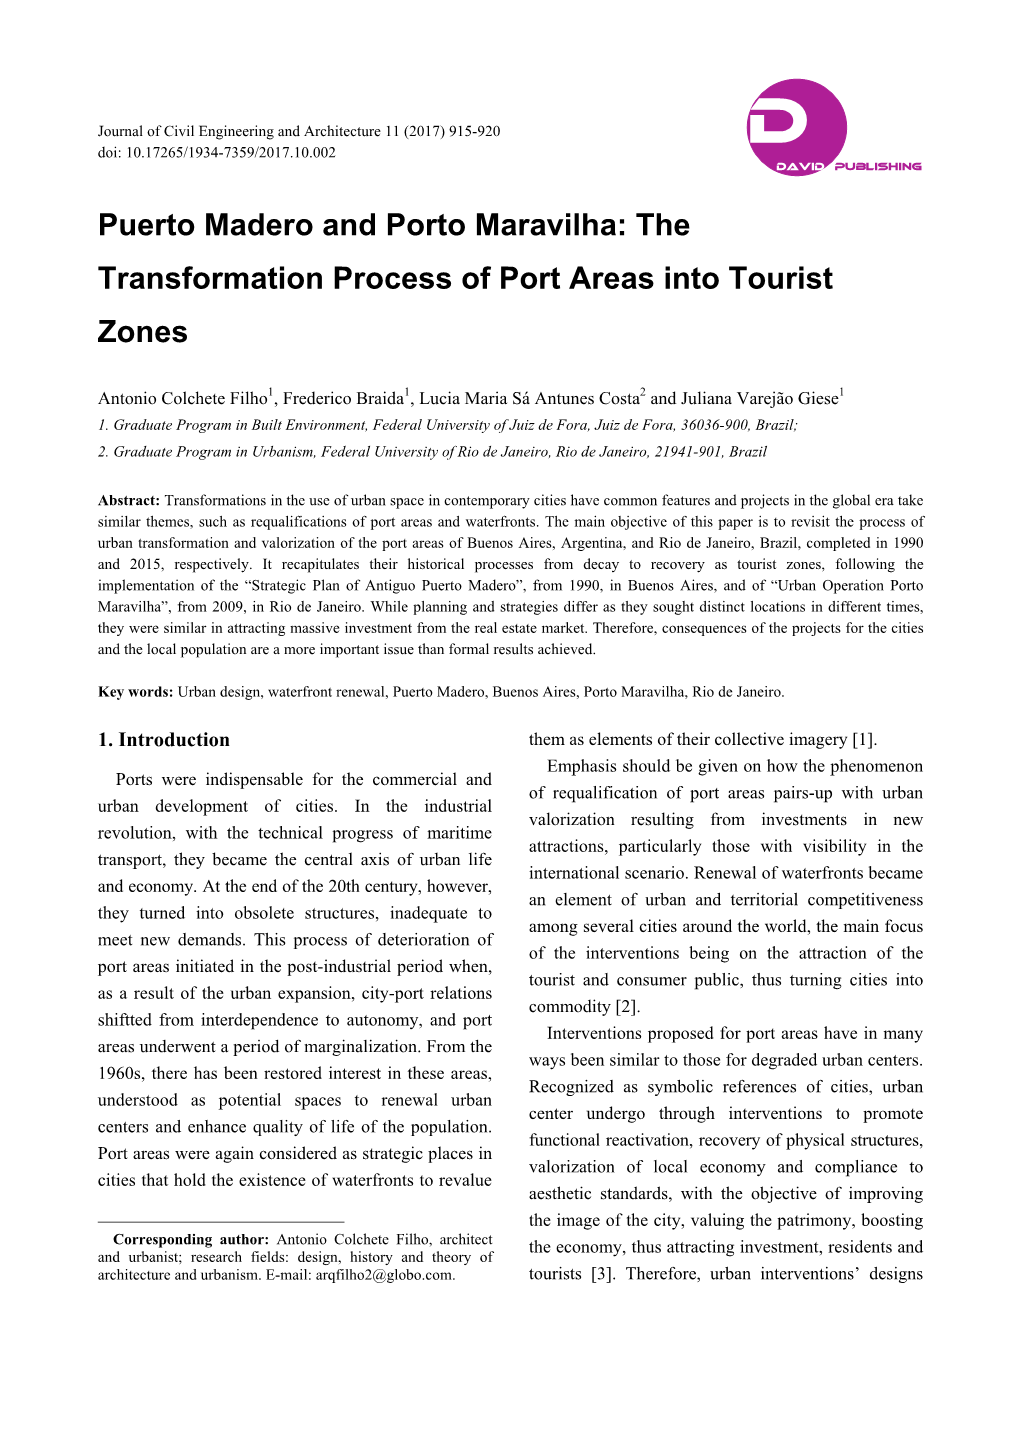 Puerto Madero and Porto Maravilha: the Transformation Process of Port Areas Into Tourist Zones